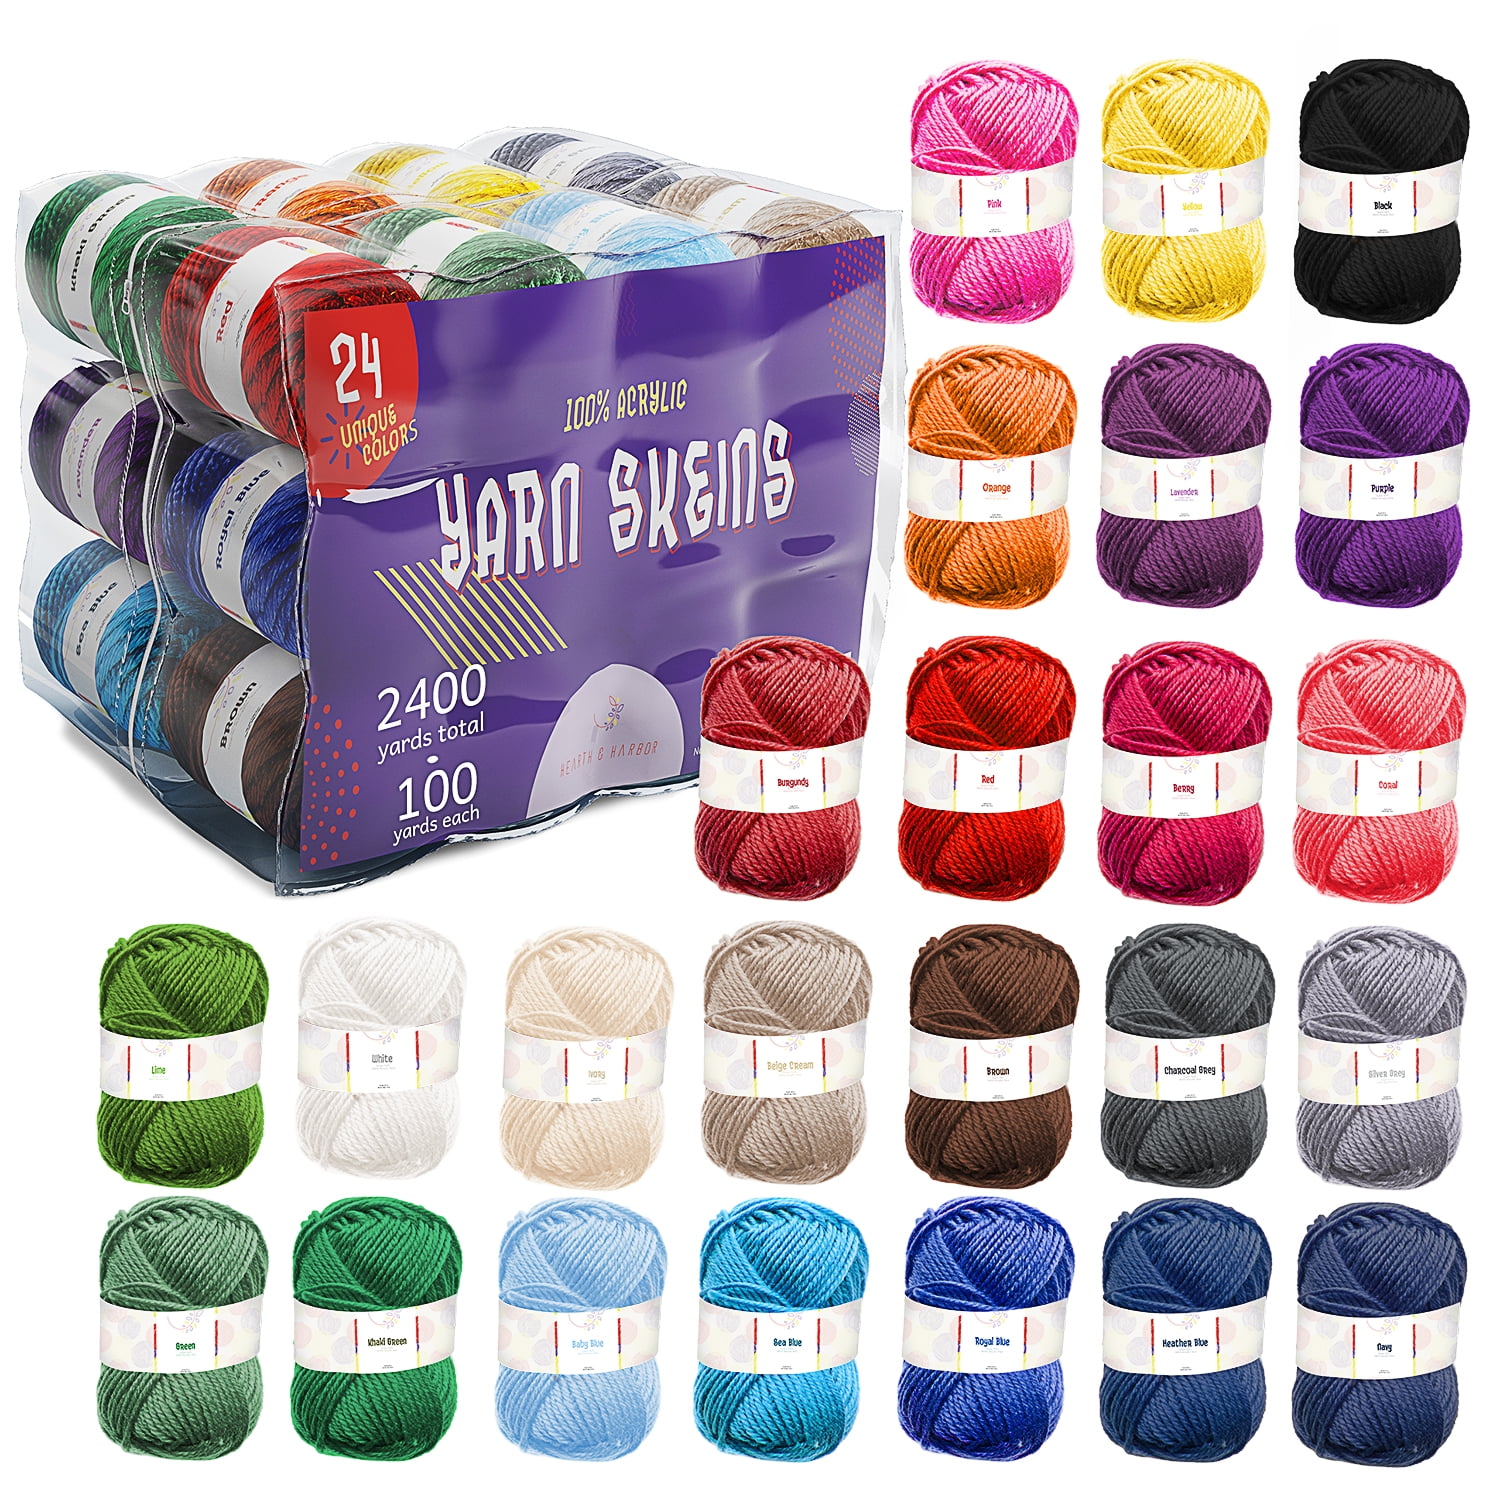 Yarn Set, Yarn Kit, Shawl Kit, untreated merino, blue yarn, purple yarn, multicolored  yarn, aplcrafts, knitting, crochet, hand dyed yarn 